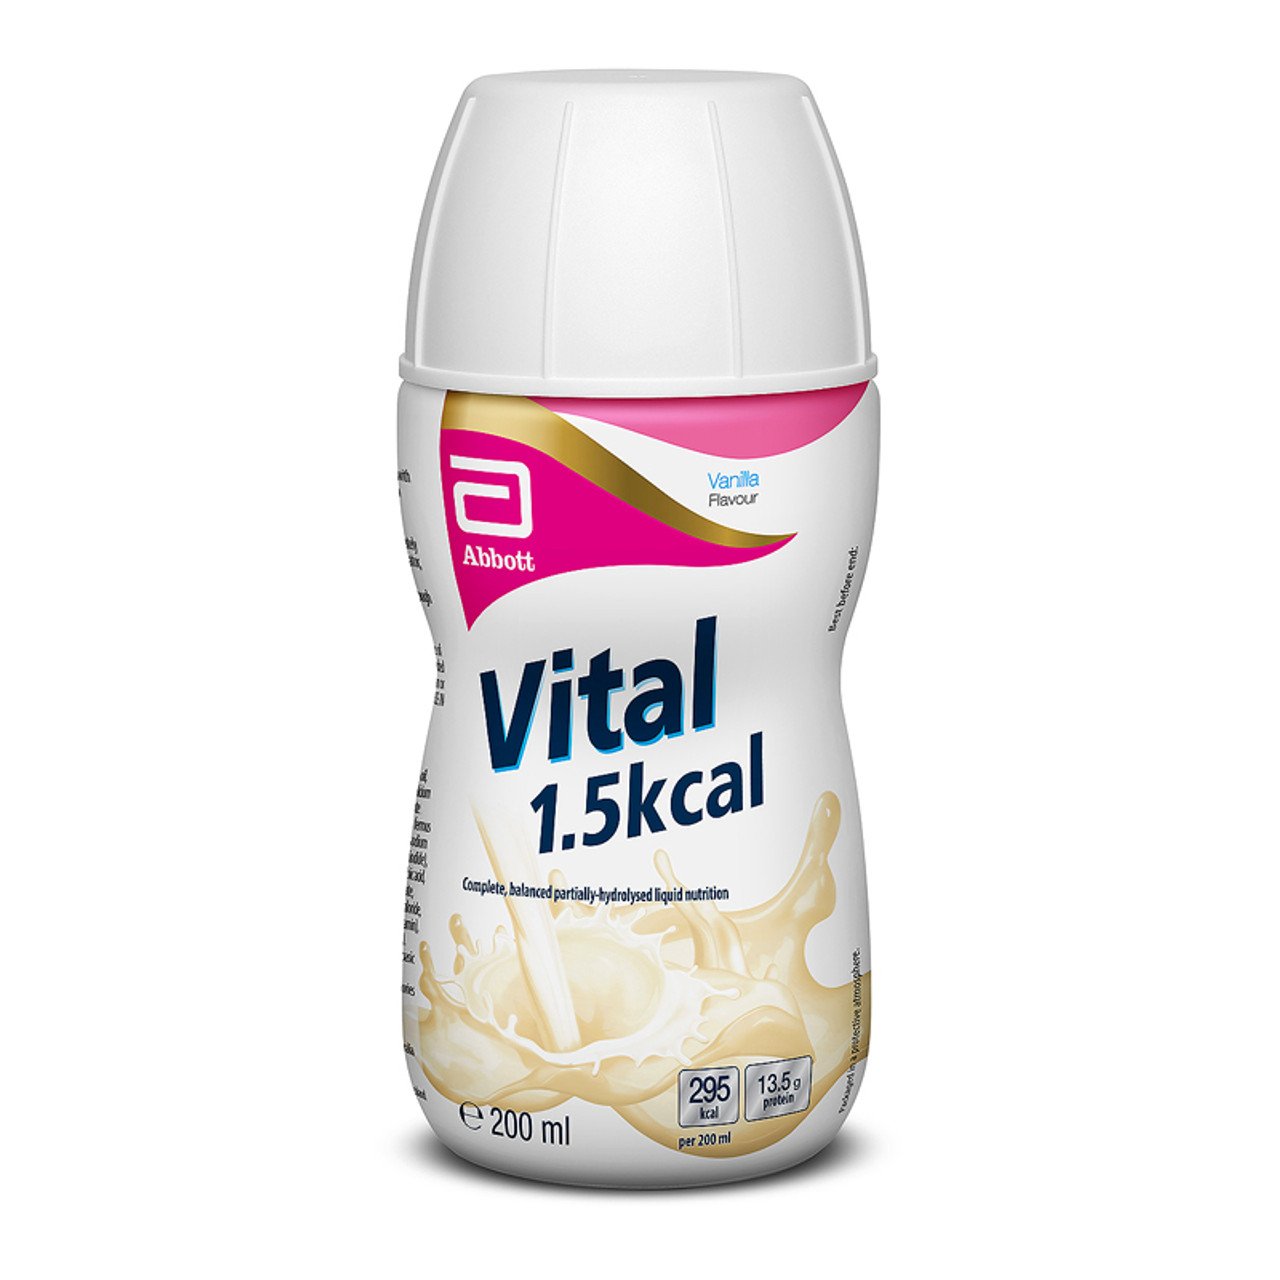 Vital 1.5 kcal Vanilla - 200ml (Carton of 30)